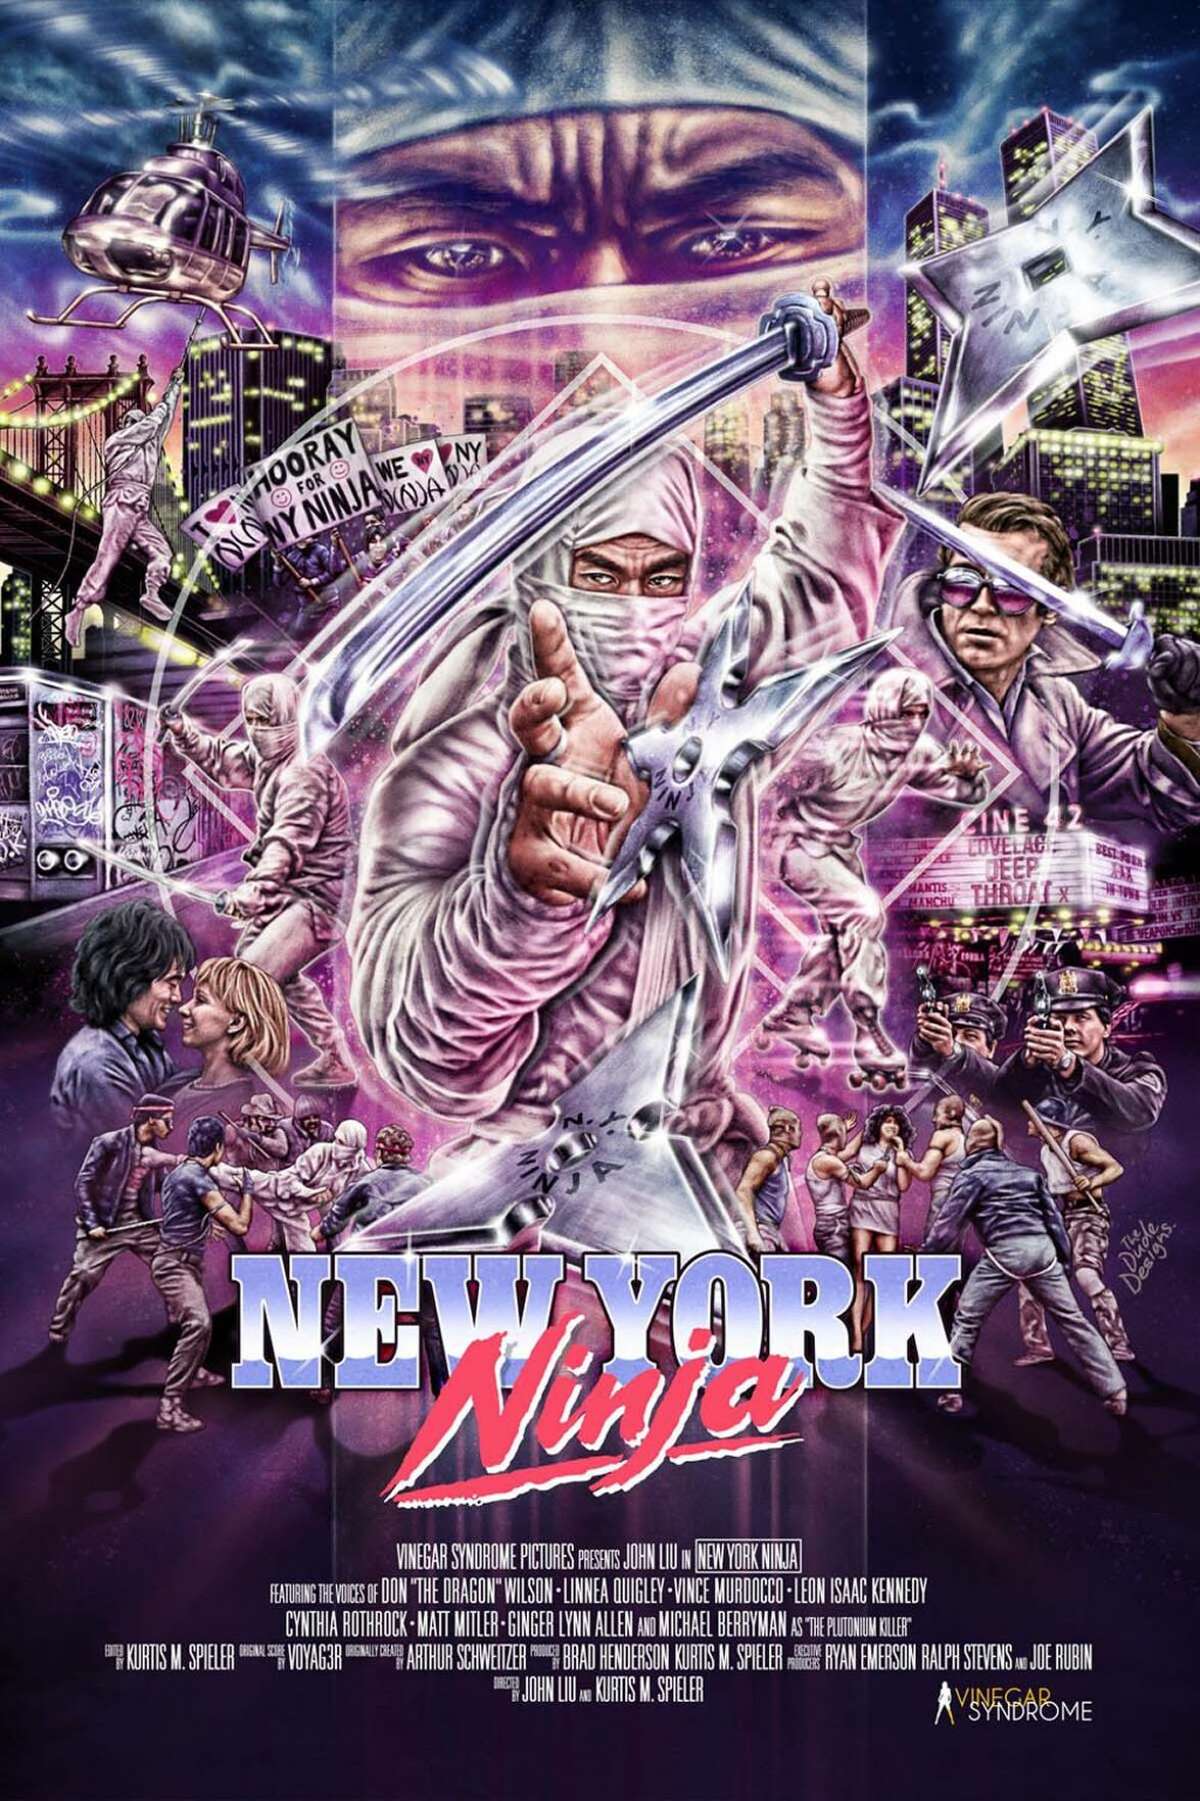 The movie poster from "New York Ninja."